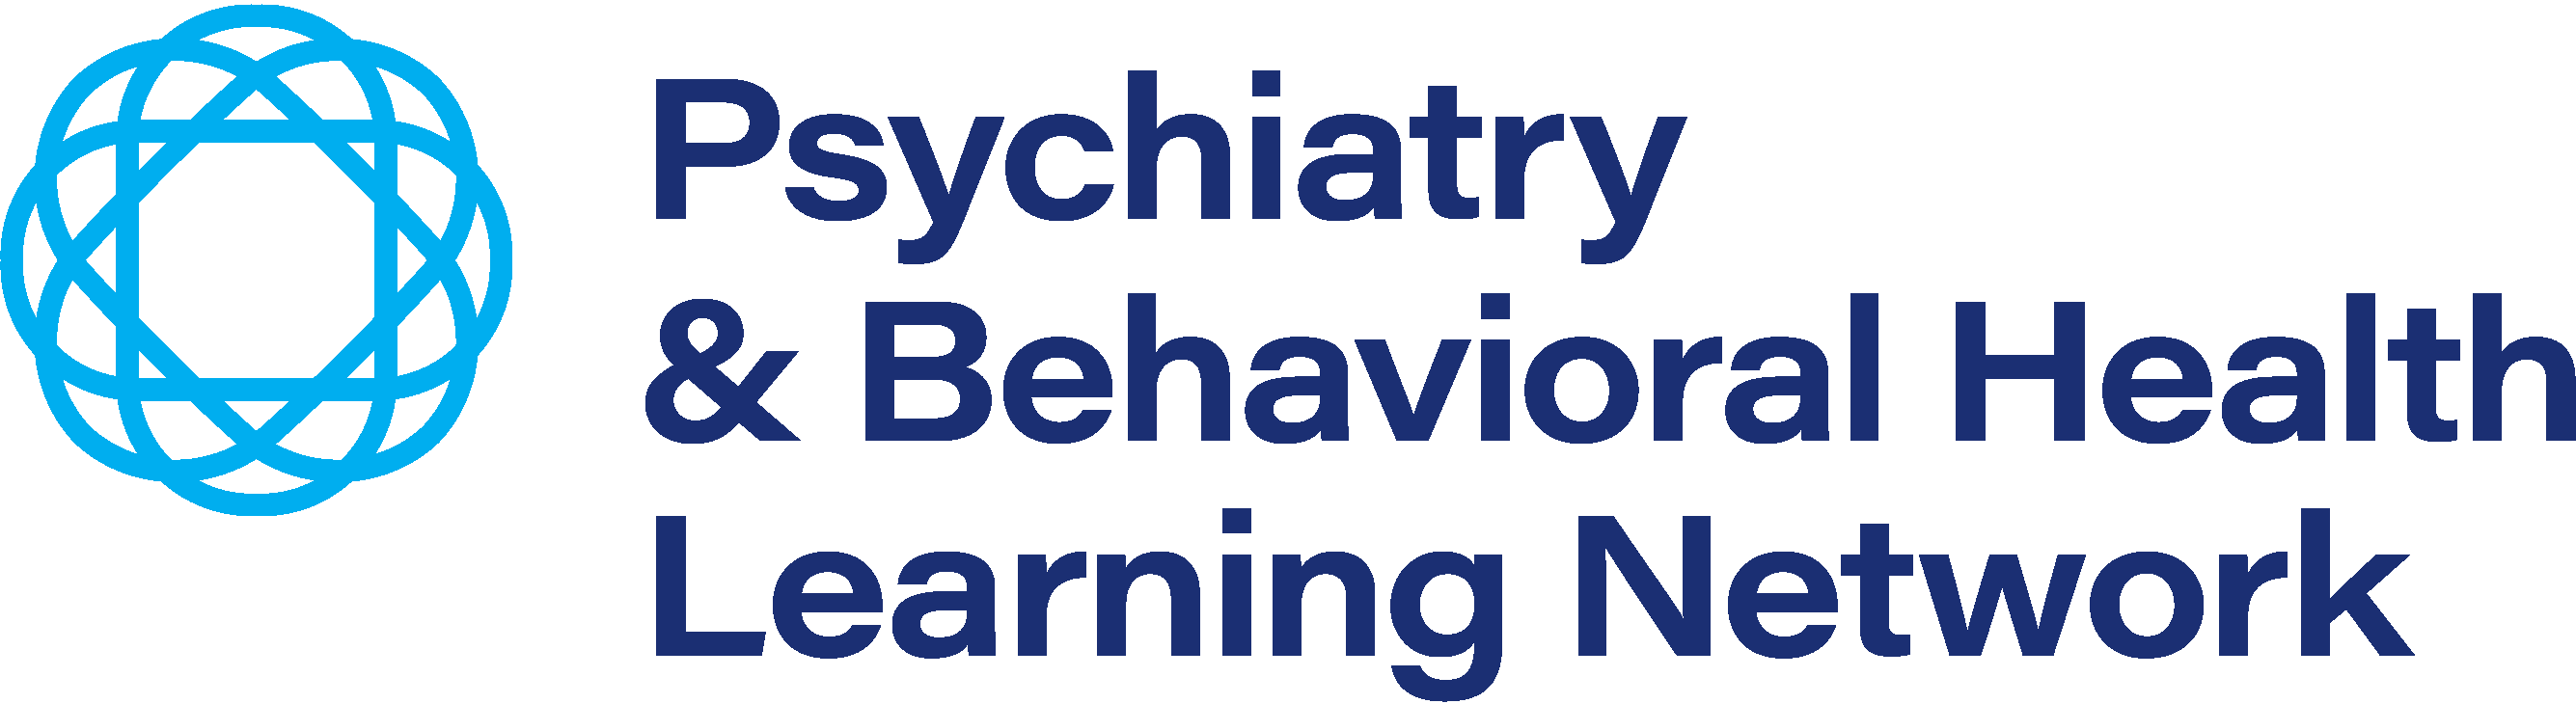 Psychiatry & Behavioral Health Network